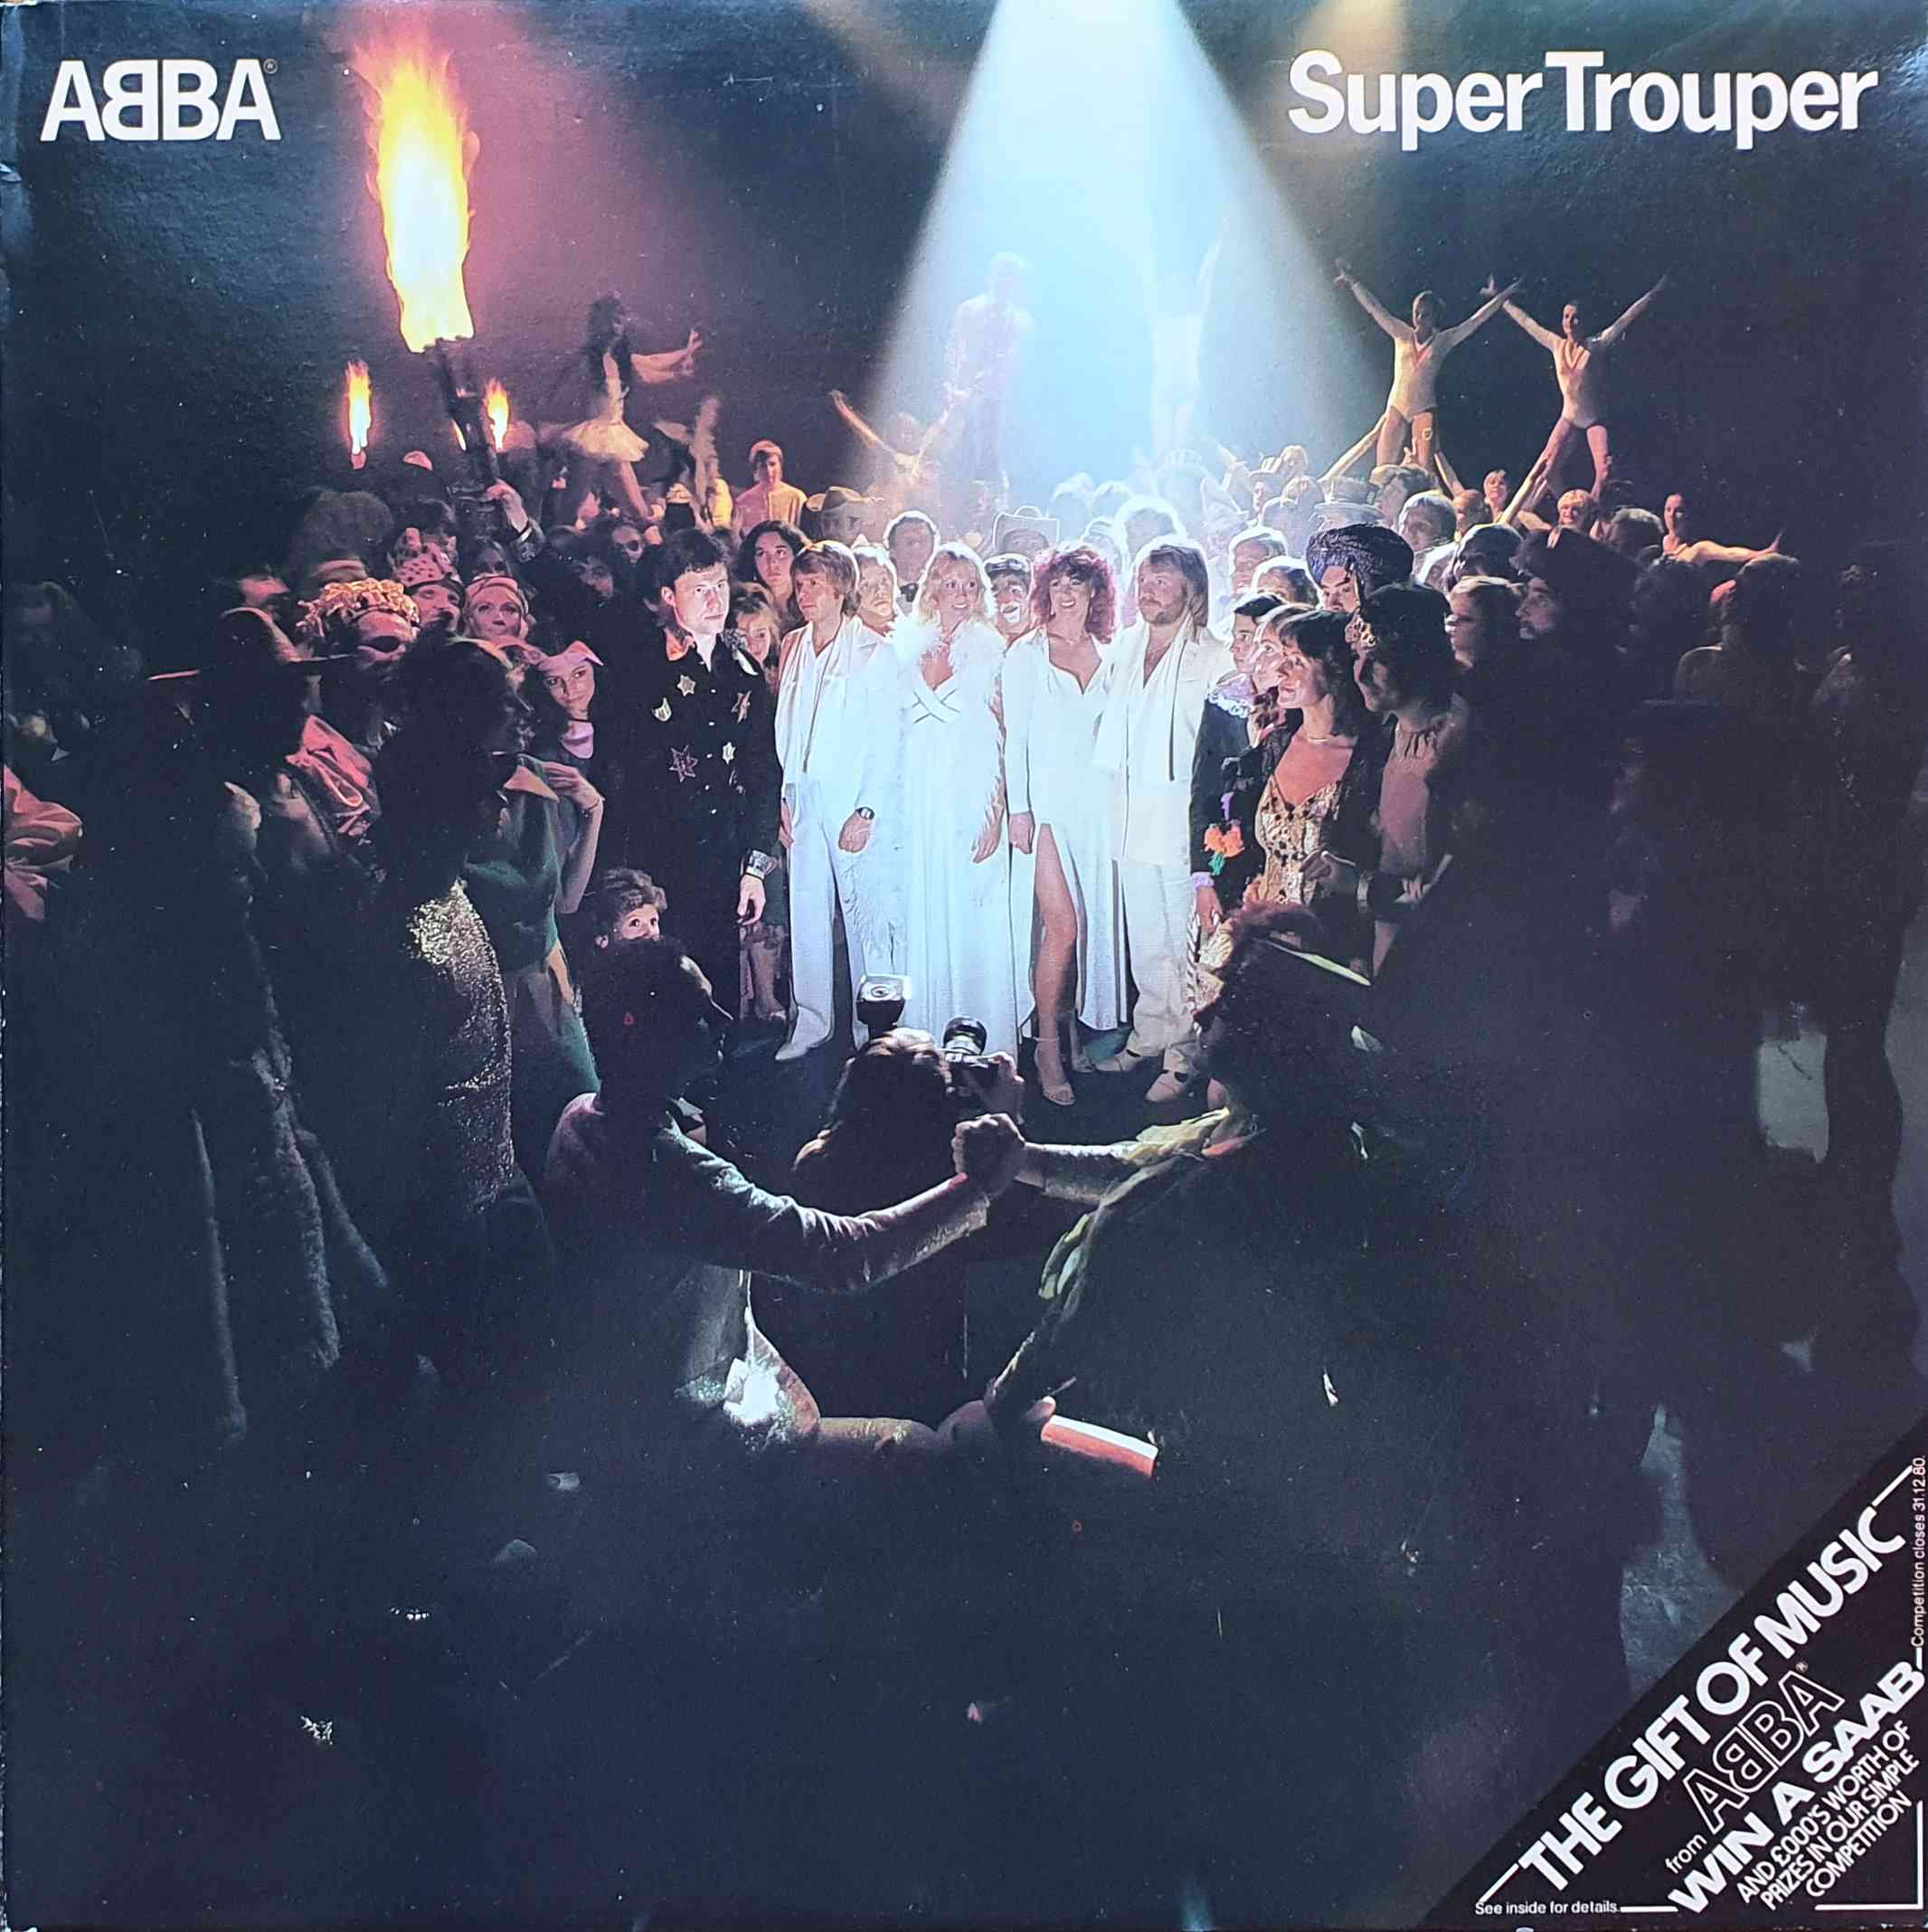 Picture of Super Trouper by artist Abba 